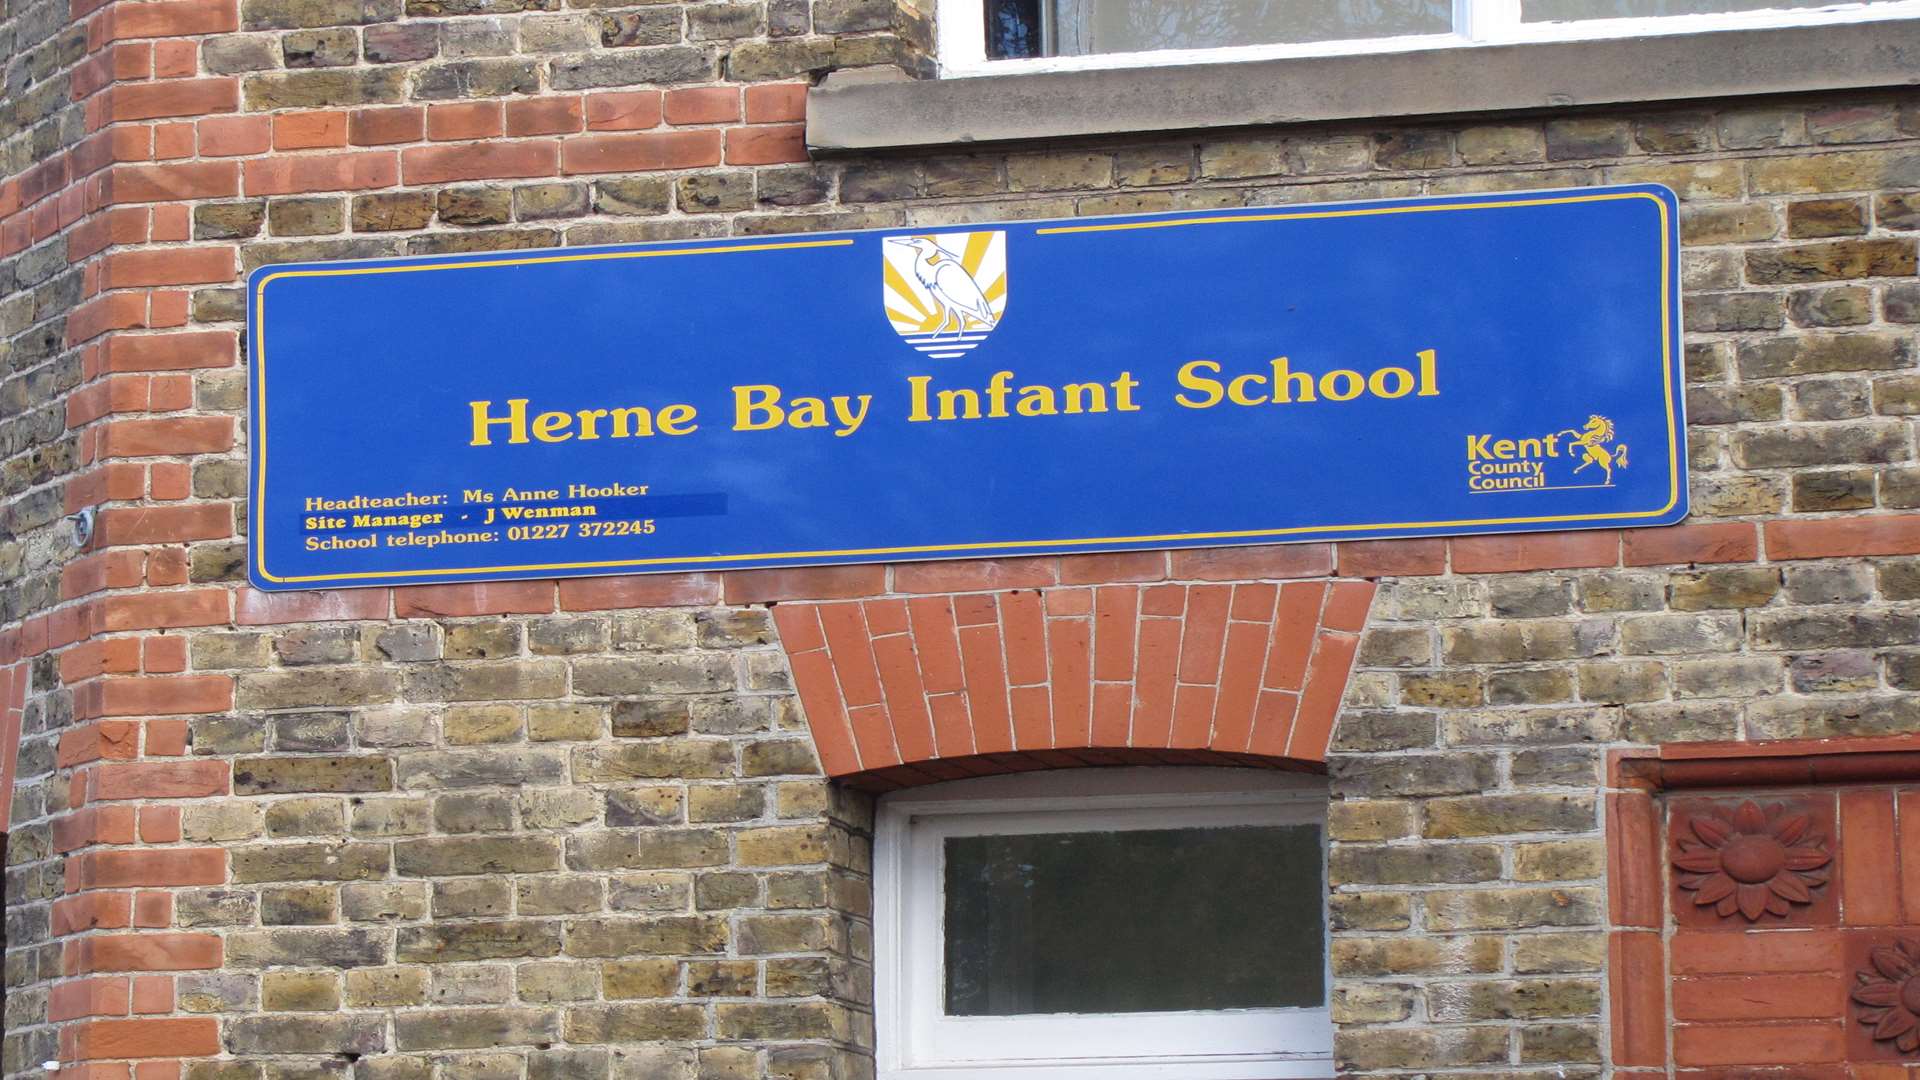 The injured boy is a pupil at Herne Bay Infant School